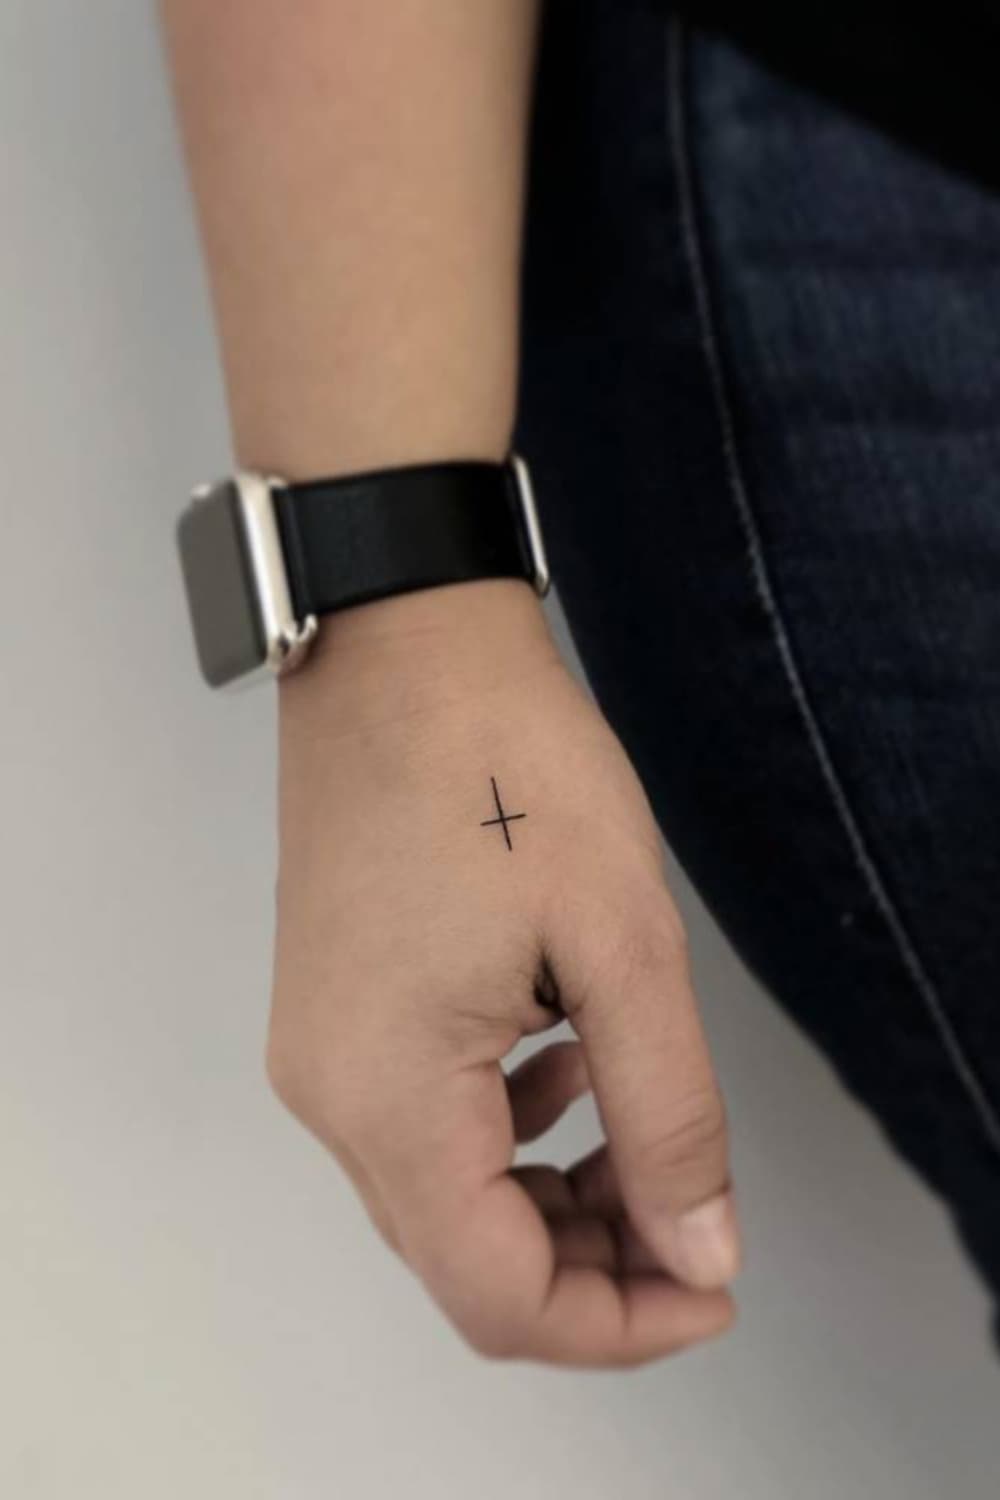 Small Cross Hand Tattoo